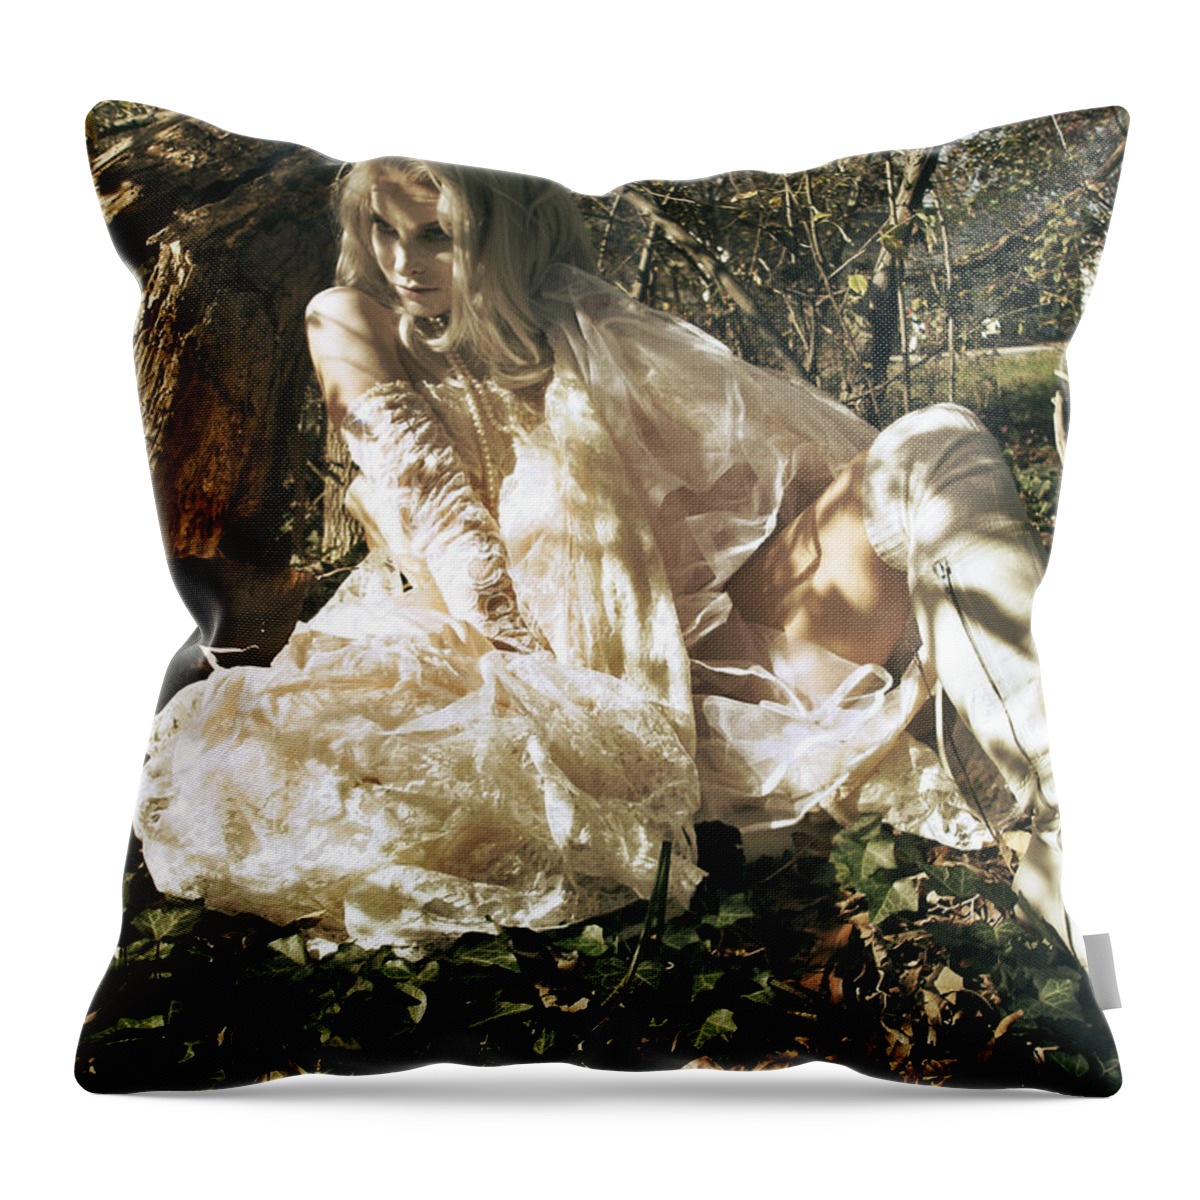 Female Throw Pillow featuring the digital art Monique 7 by Mark Baranowski